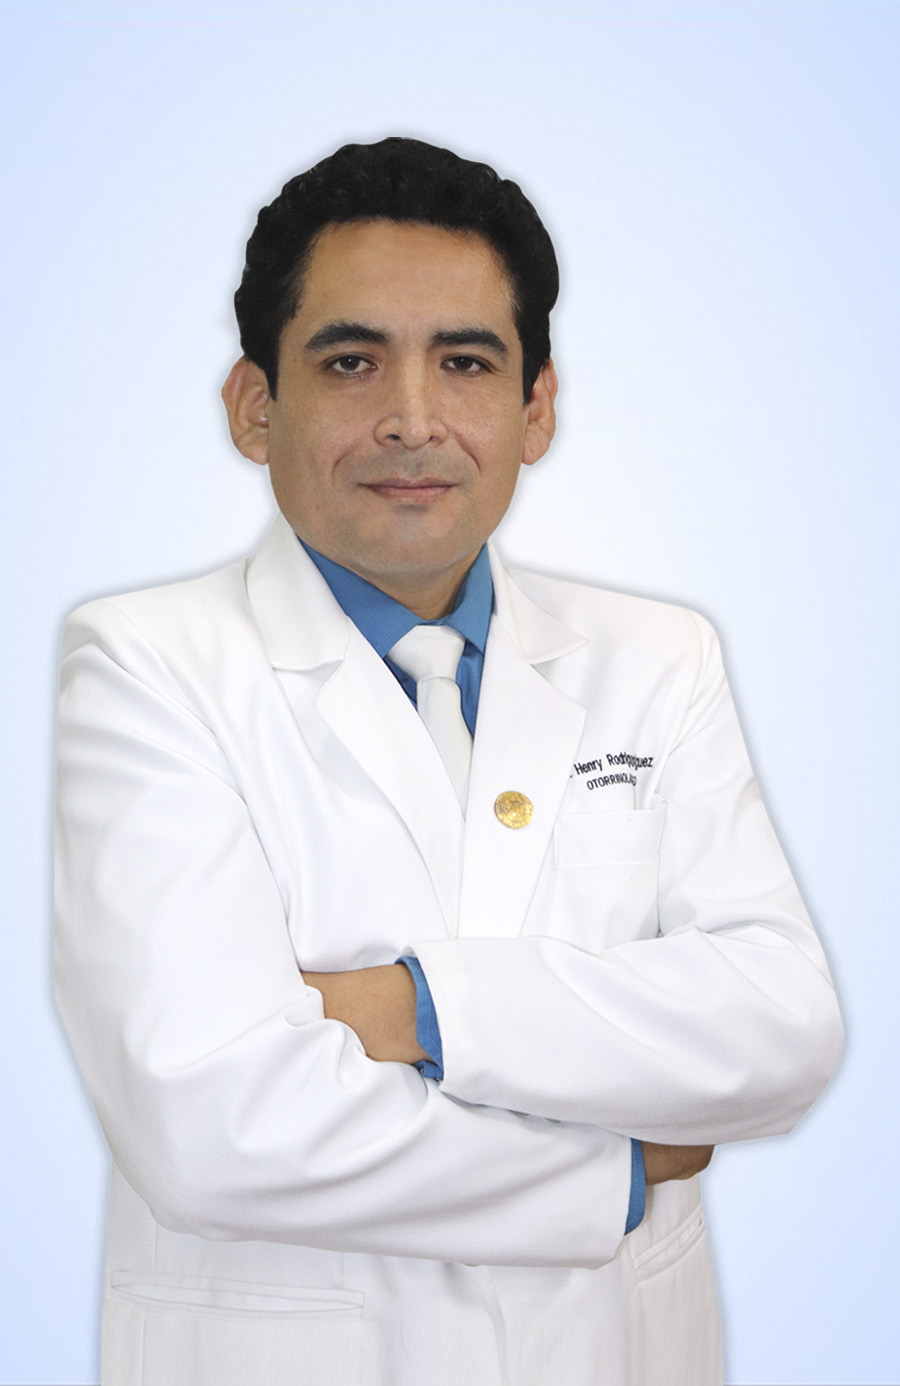 DR. HENRY RODRIGUEZ